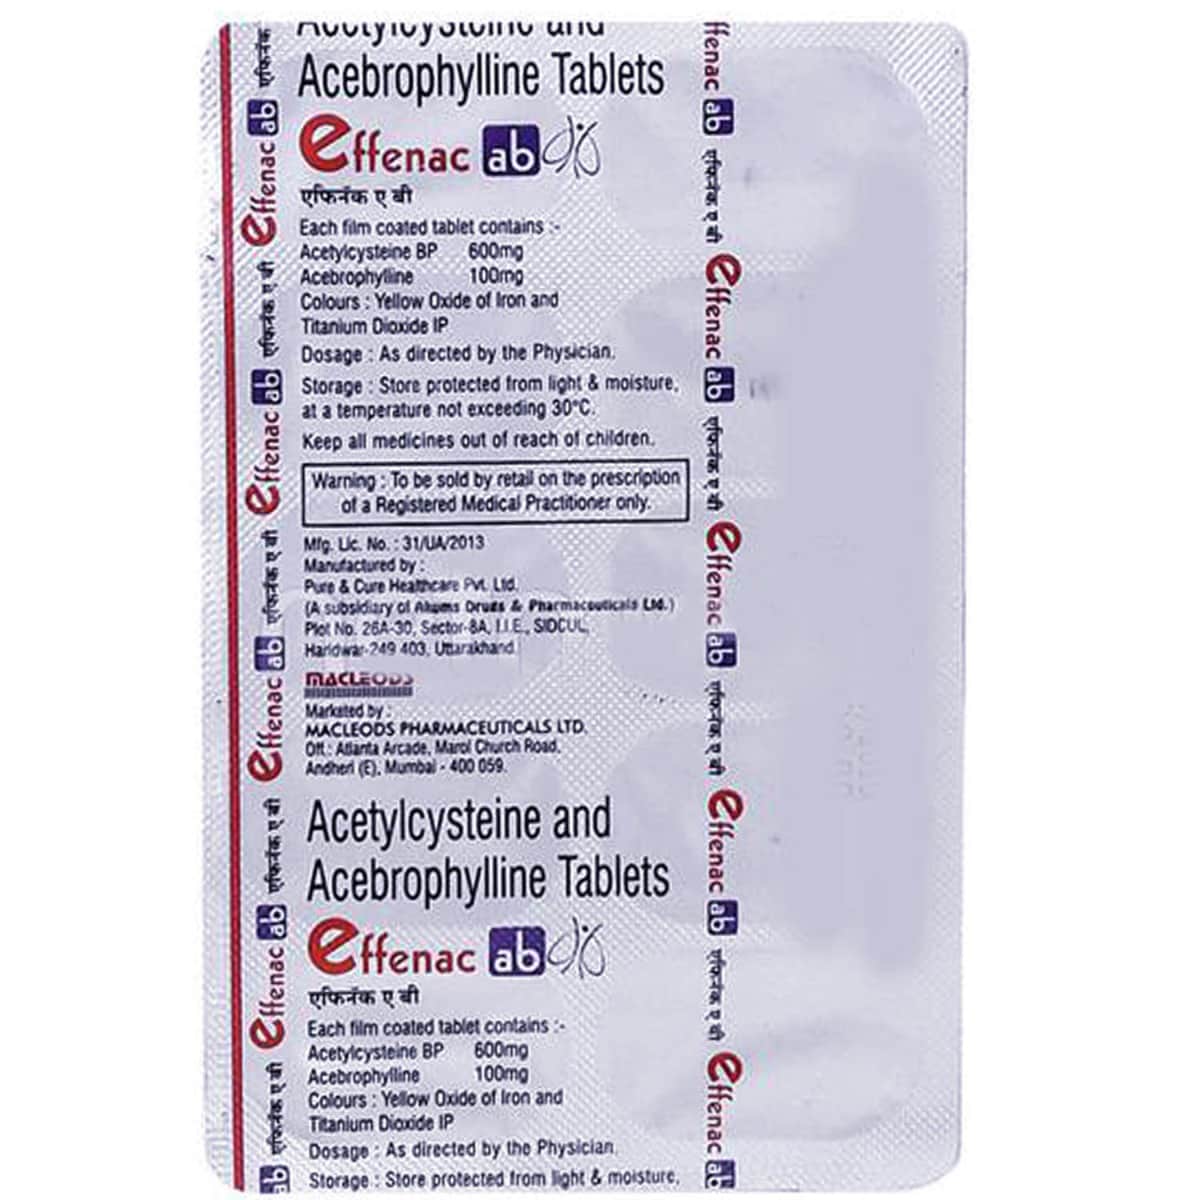 Effenac AB Tablet (Acebrofylline and Acetylcysteine)